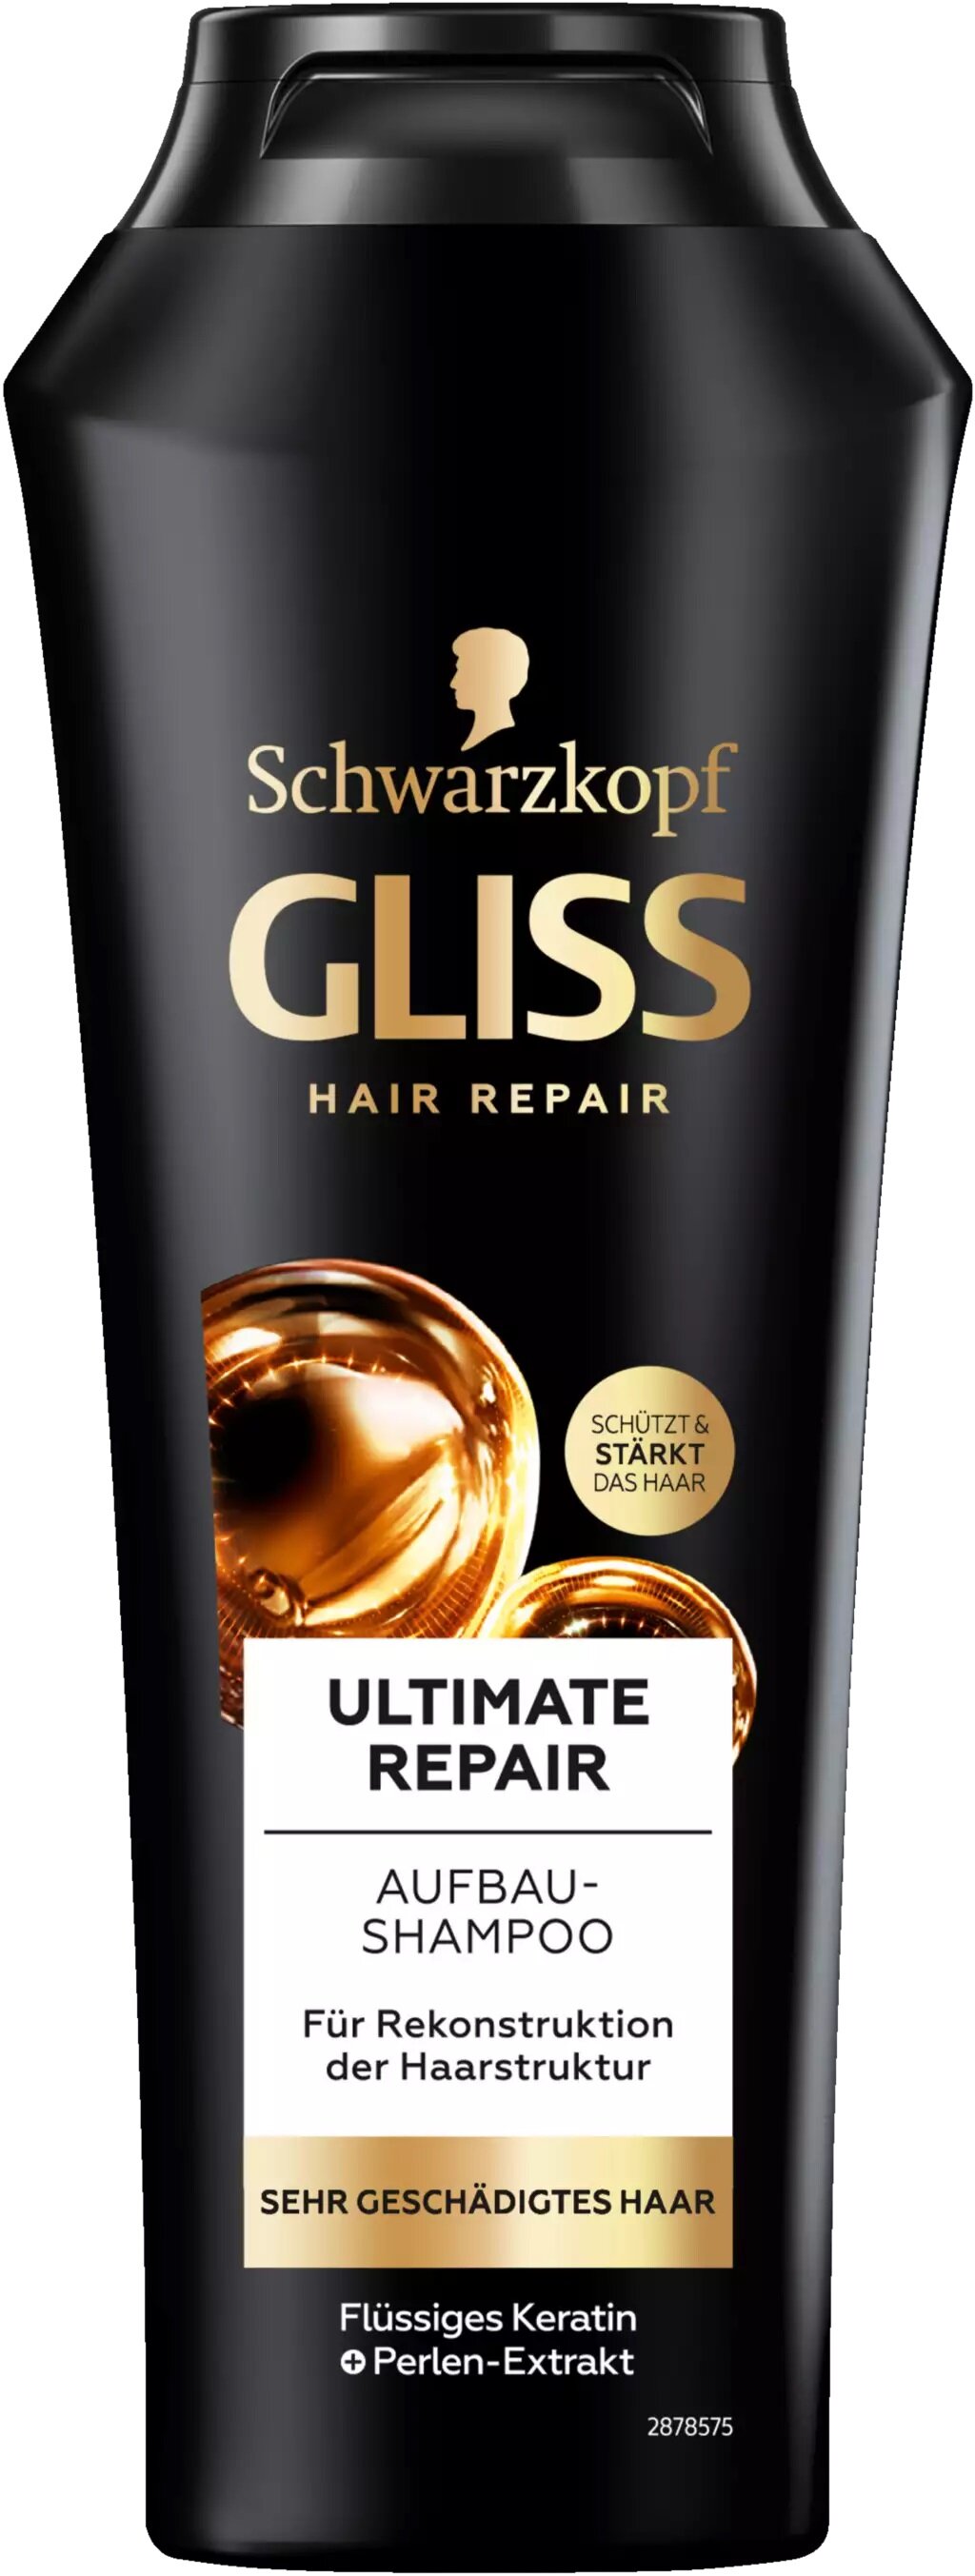 opinie o szampon gliss kur ultimate repair